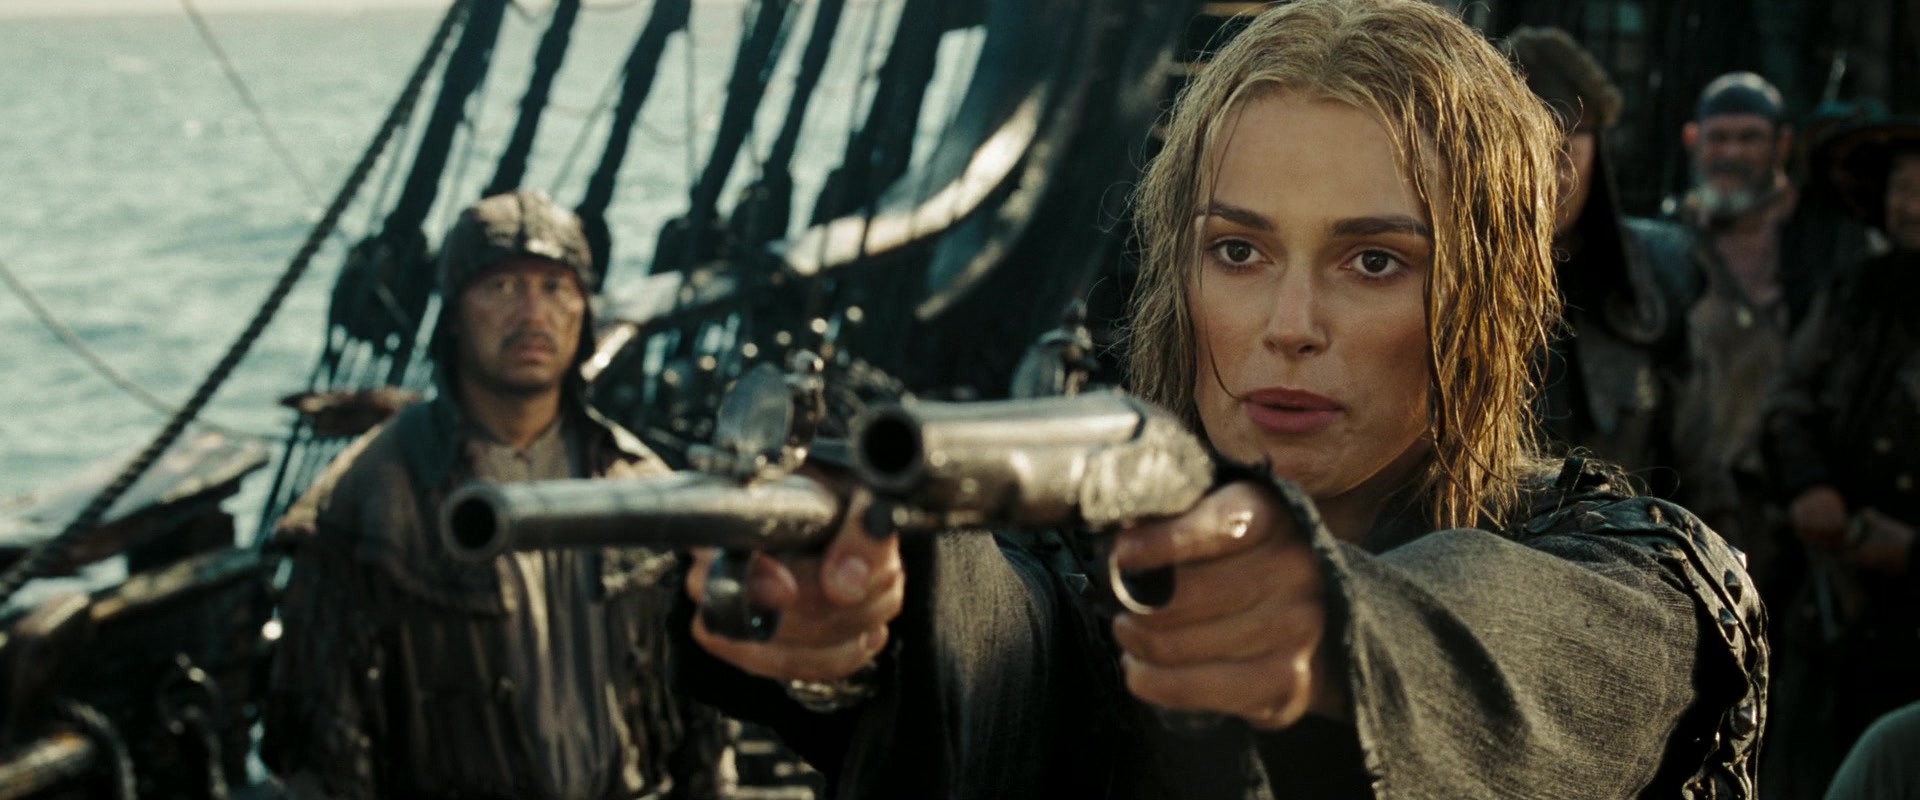 Elizabeth Swann (Keira Knightley) draws on Captain Jack Sparrow (Johnny Depp) in Pirates of the Caribbean: Dead Man's Chest (2006) via Blu-ray